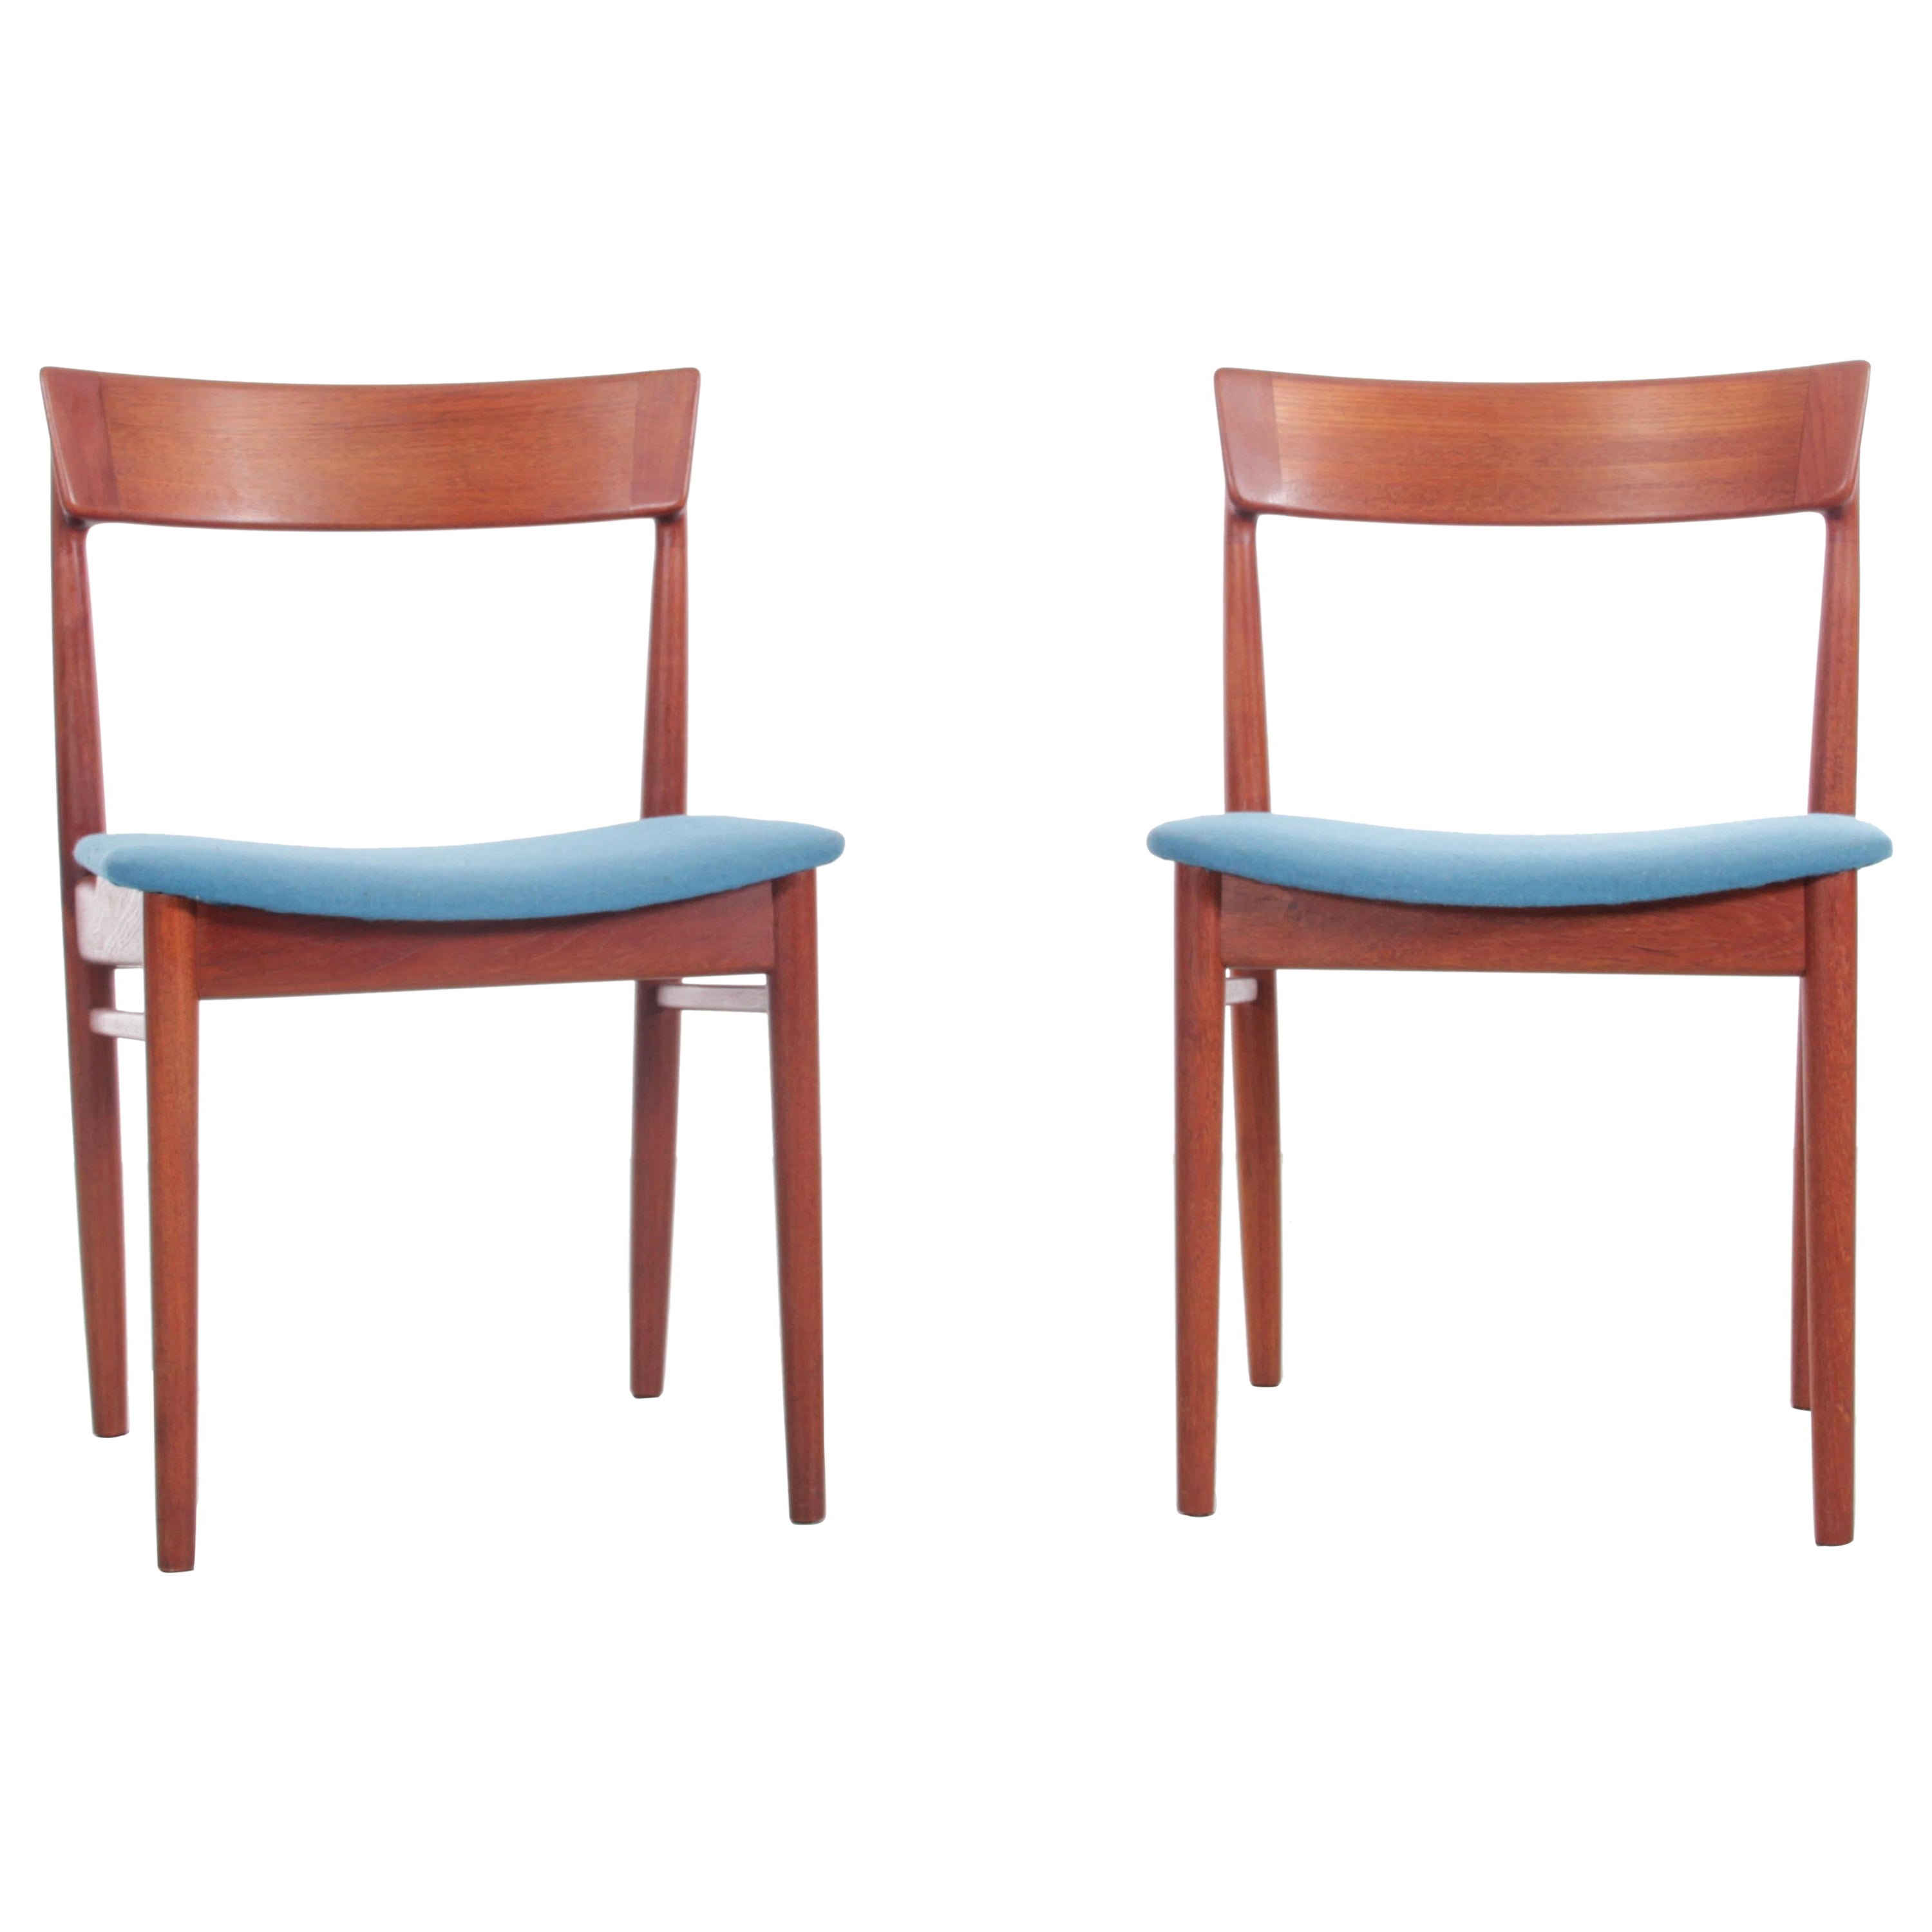 Mid-Century Modern Scandinavian Pair of Chairs in Teak by Harry Rosengren Hansen